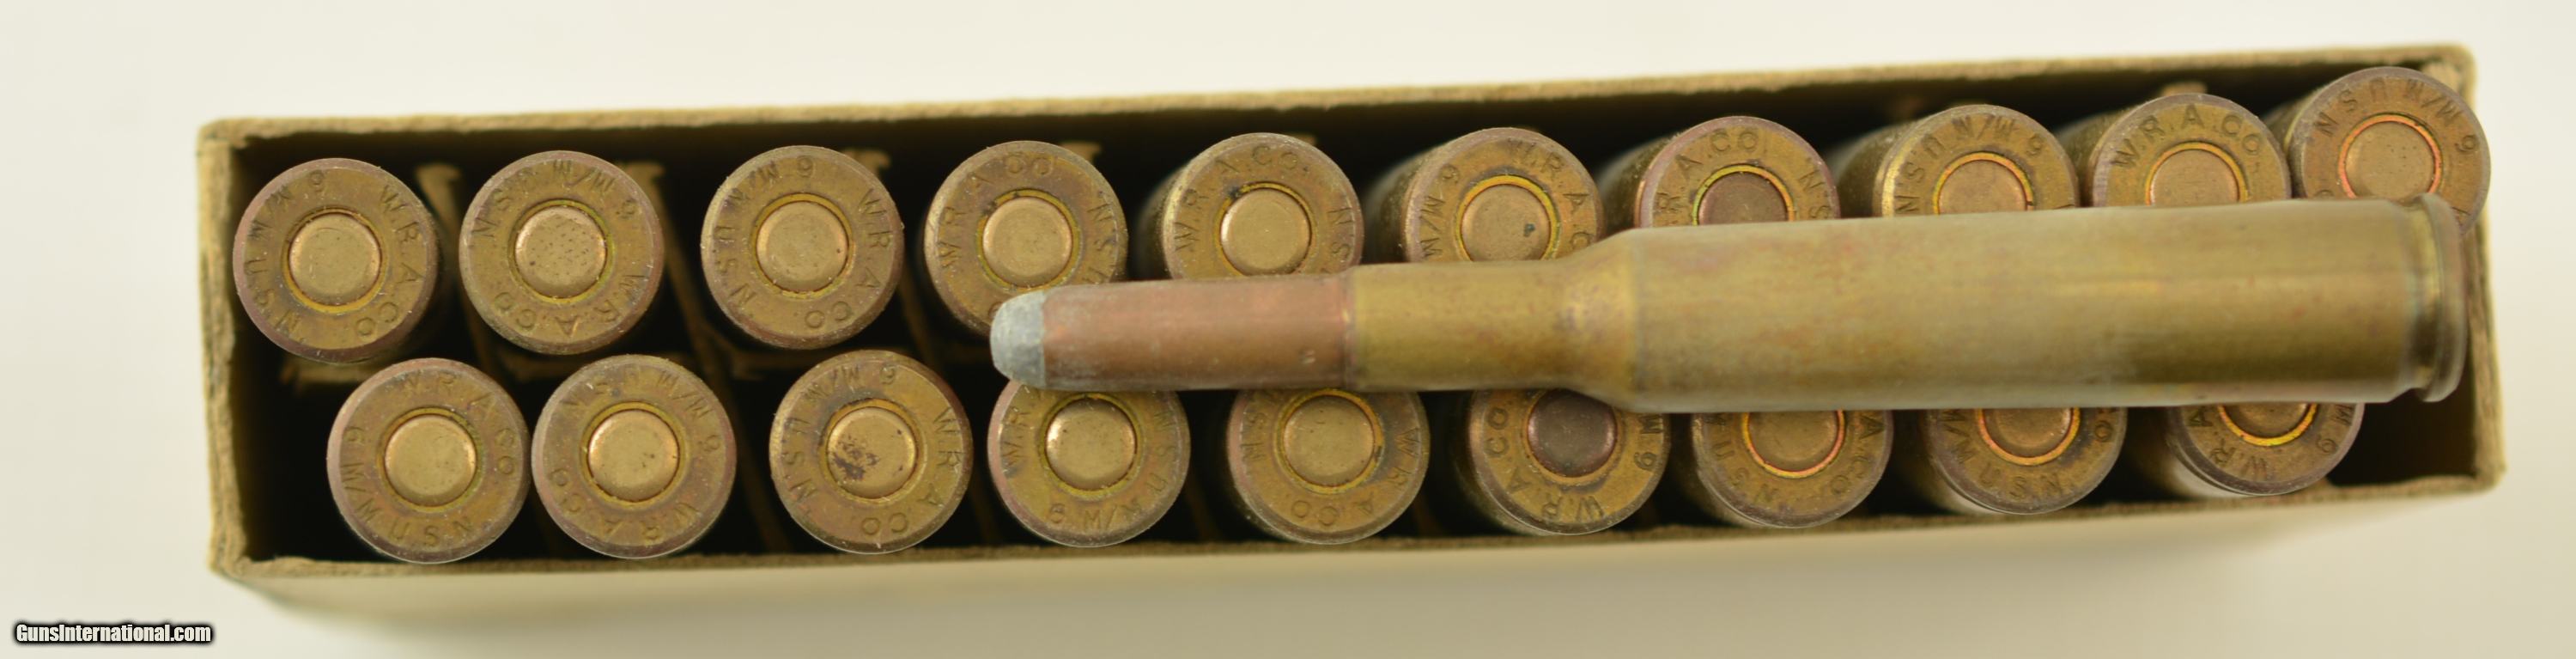 6mm Lee Navy (236 Navy) Reformed Brass Cases*